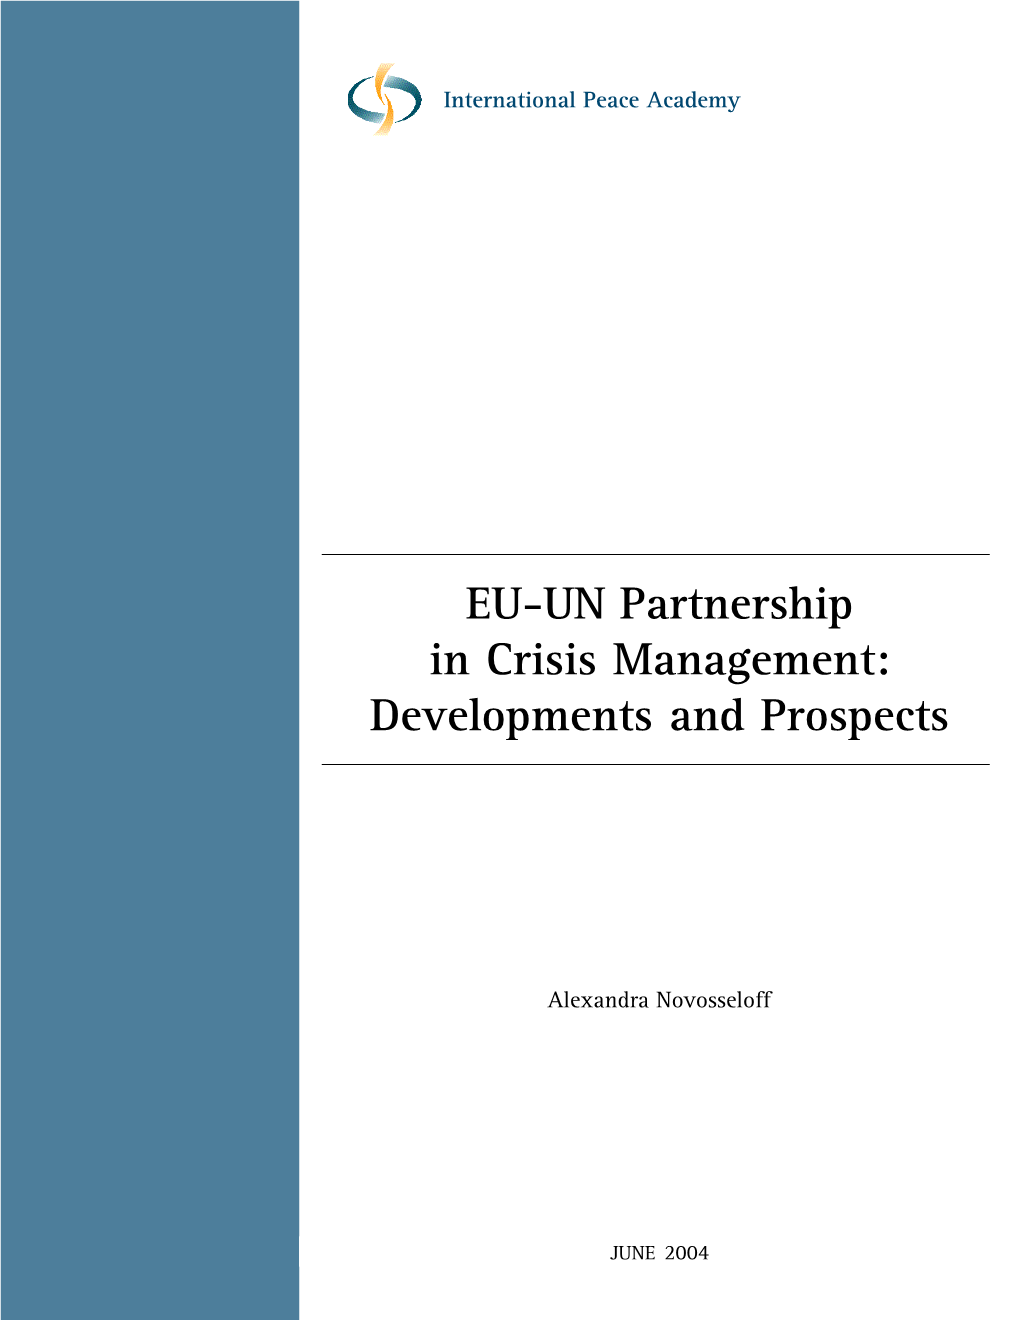 EU-UN Partnership in Crisis Management: Developments and Prospects